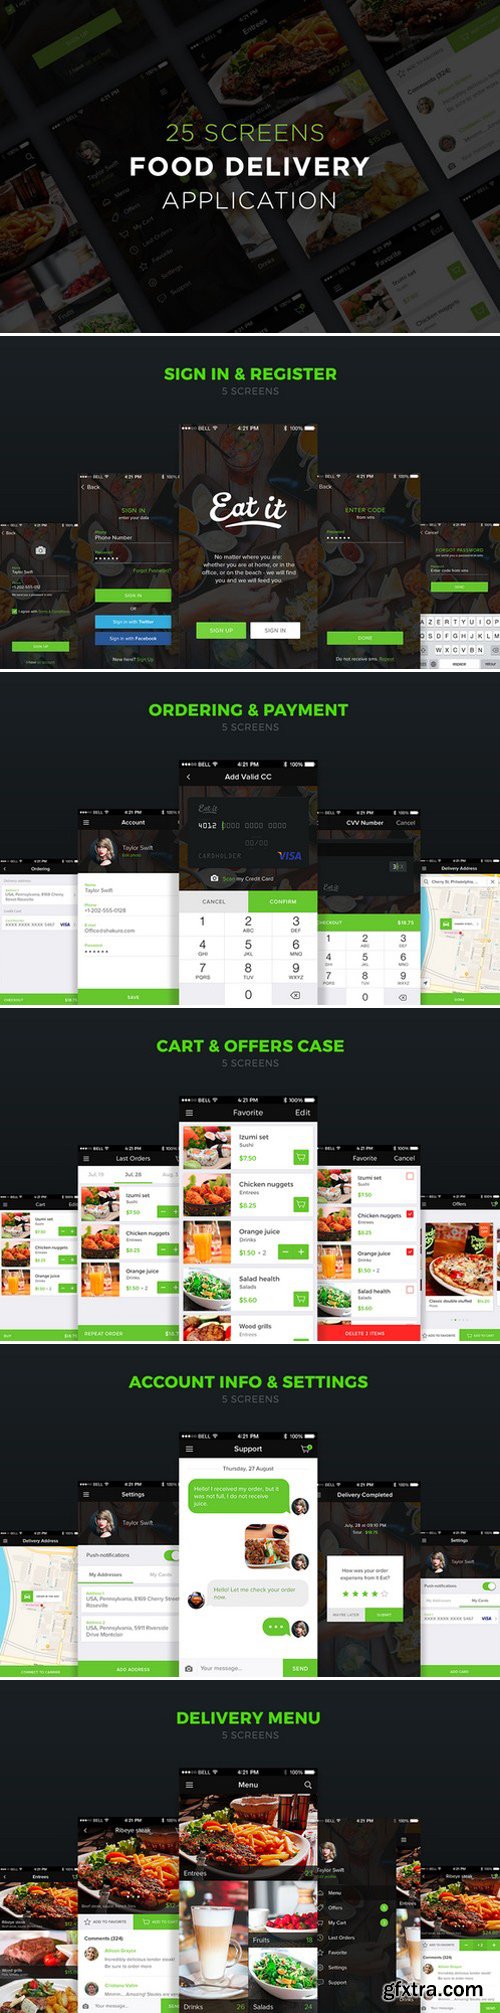 CM - Food delivery app UI 414158